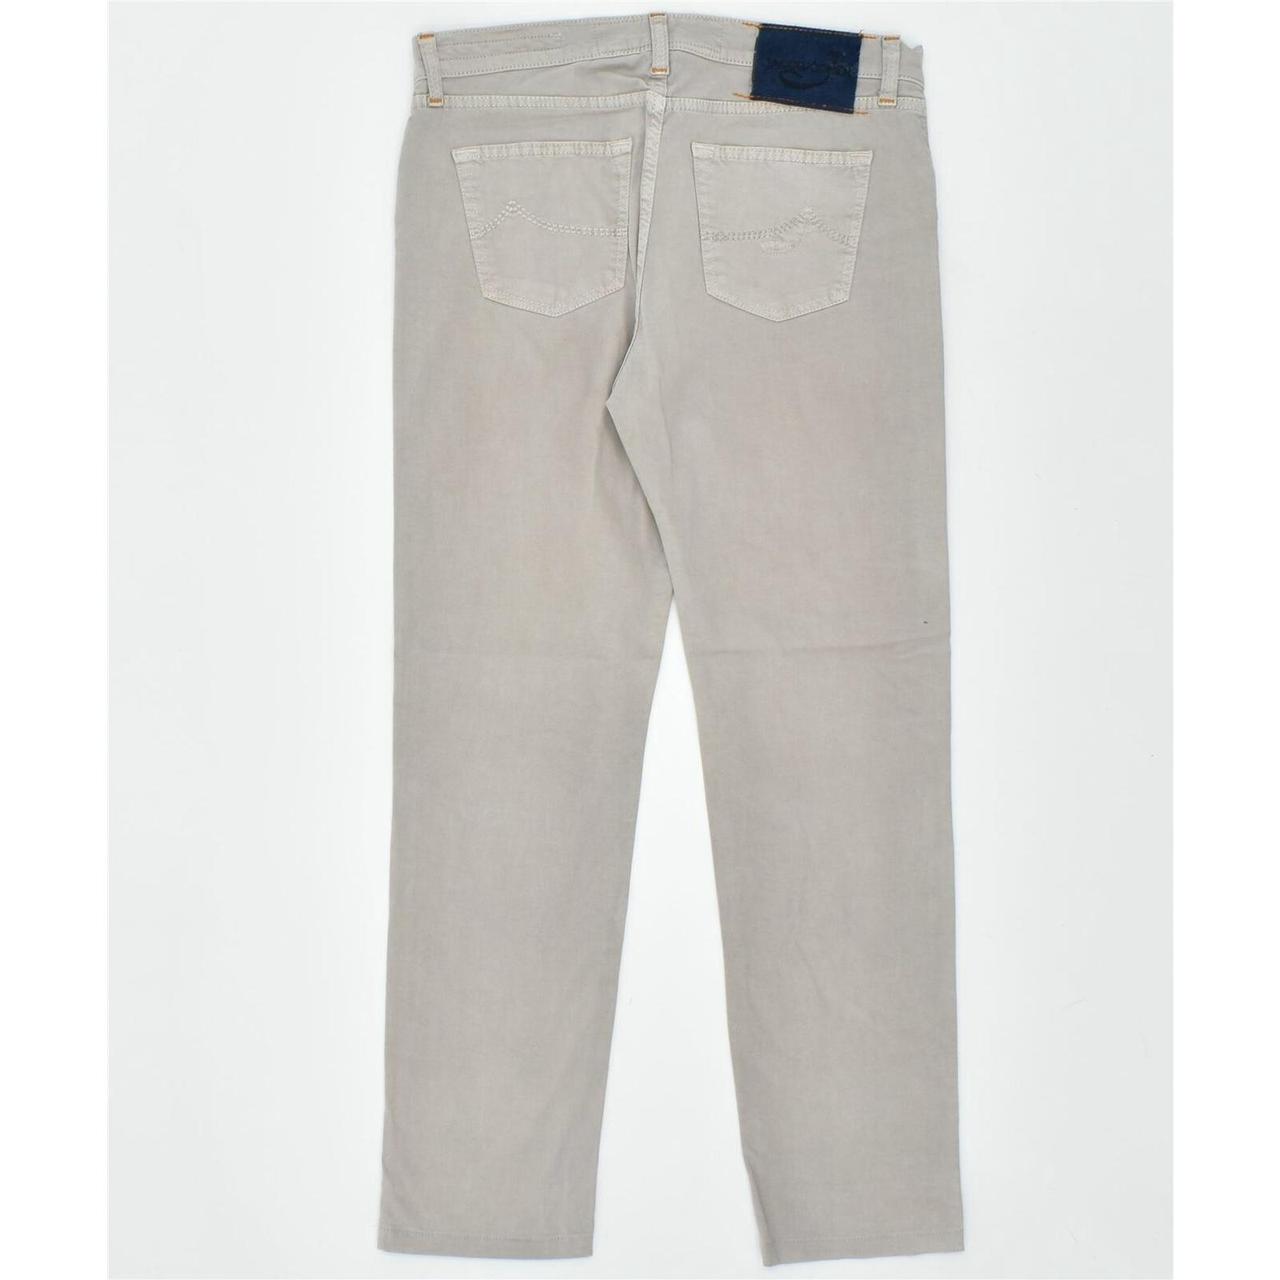 Jacob Cohen Women's Grey Trousers (2)